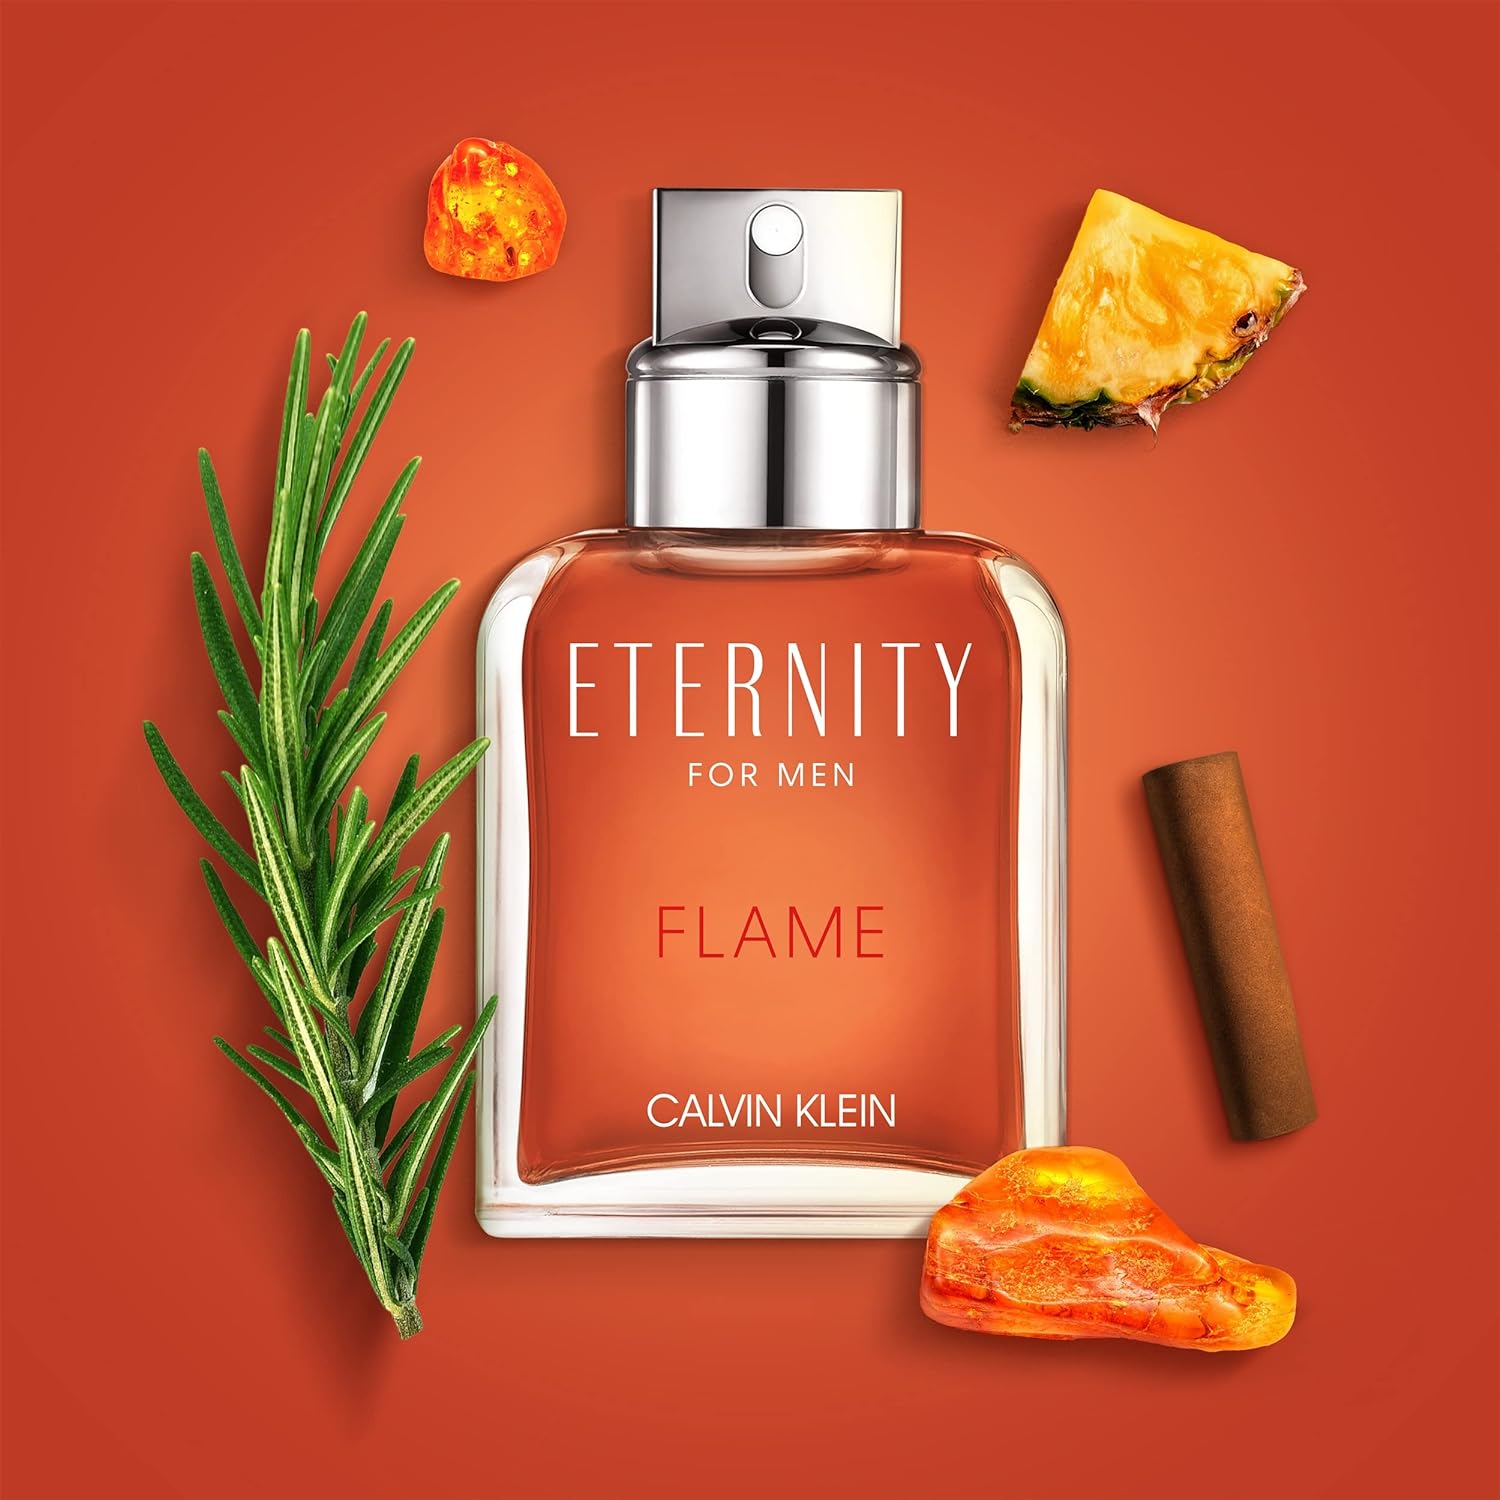 Calvin Klein Eternity Flame Eau de Toilette Spray 100 ml for Men